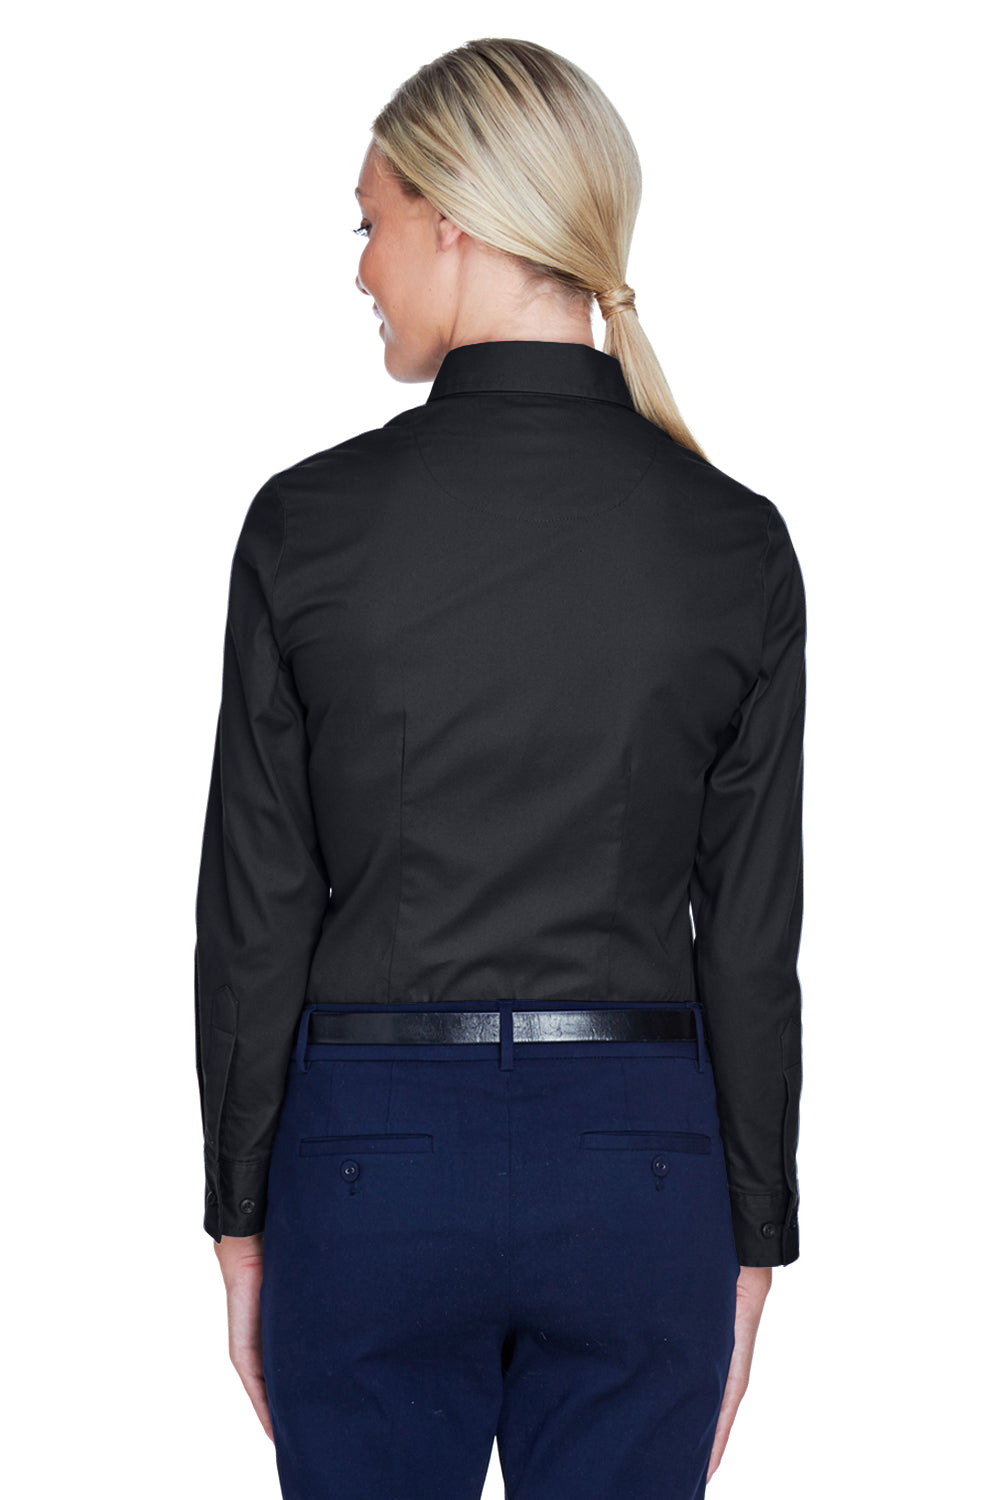 UltraClub 8976 Womens Whisper Long Sleeve Button Down Shirt Black Back